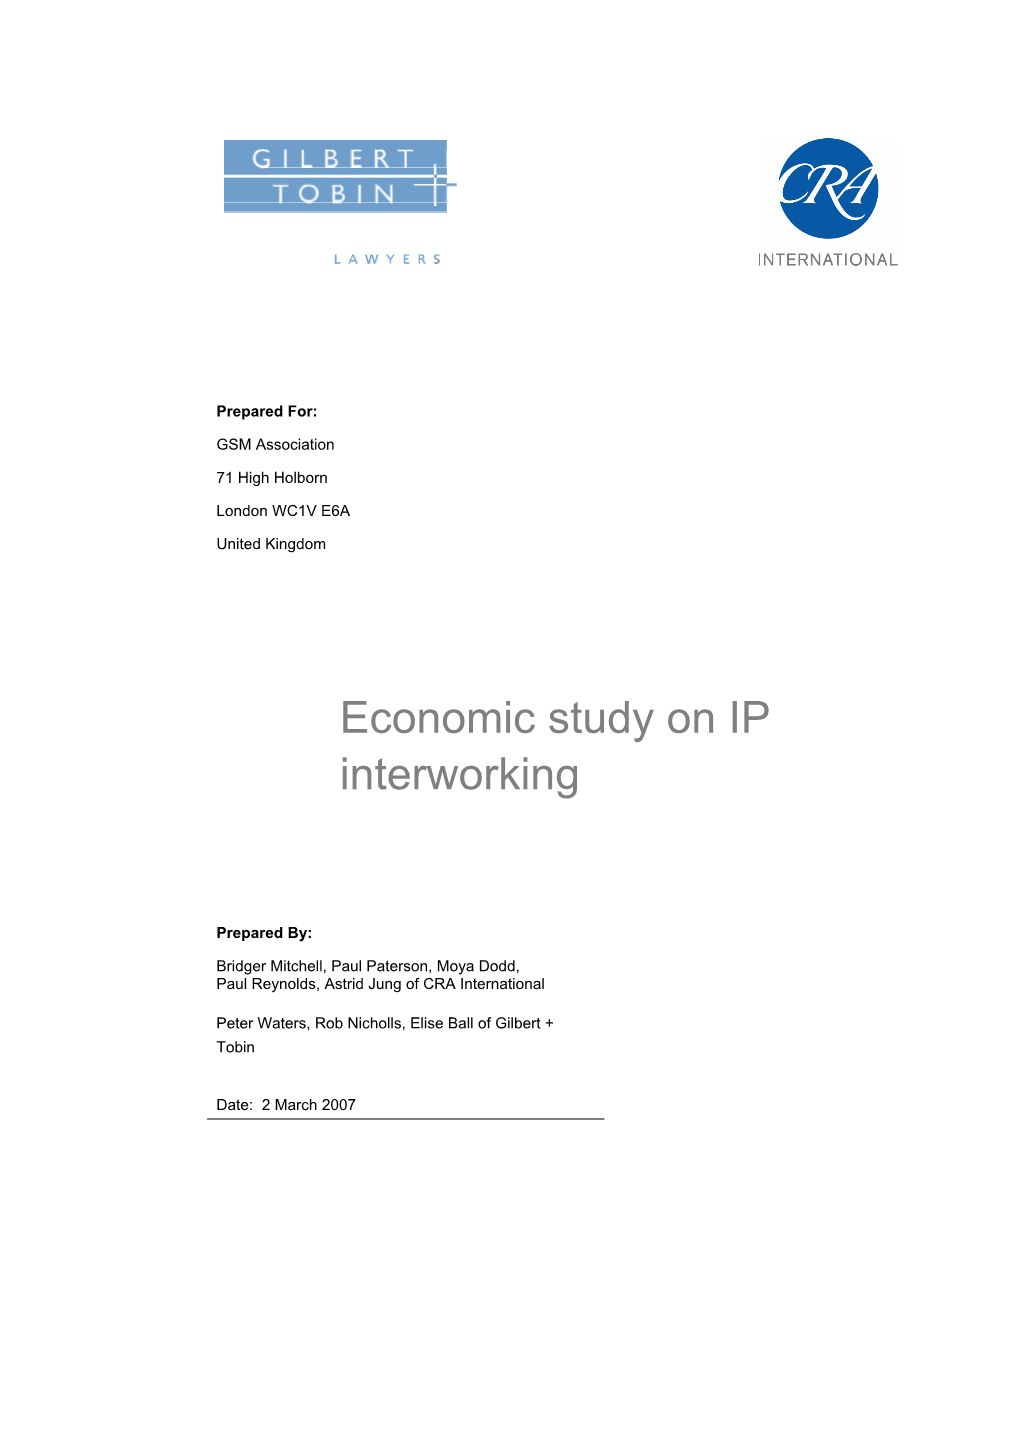 Economic Study on IP Interworking